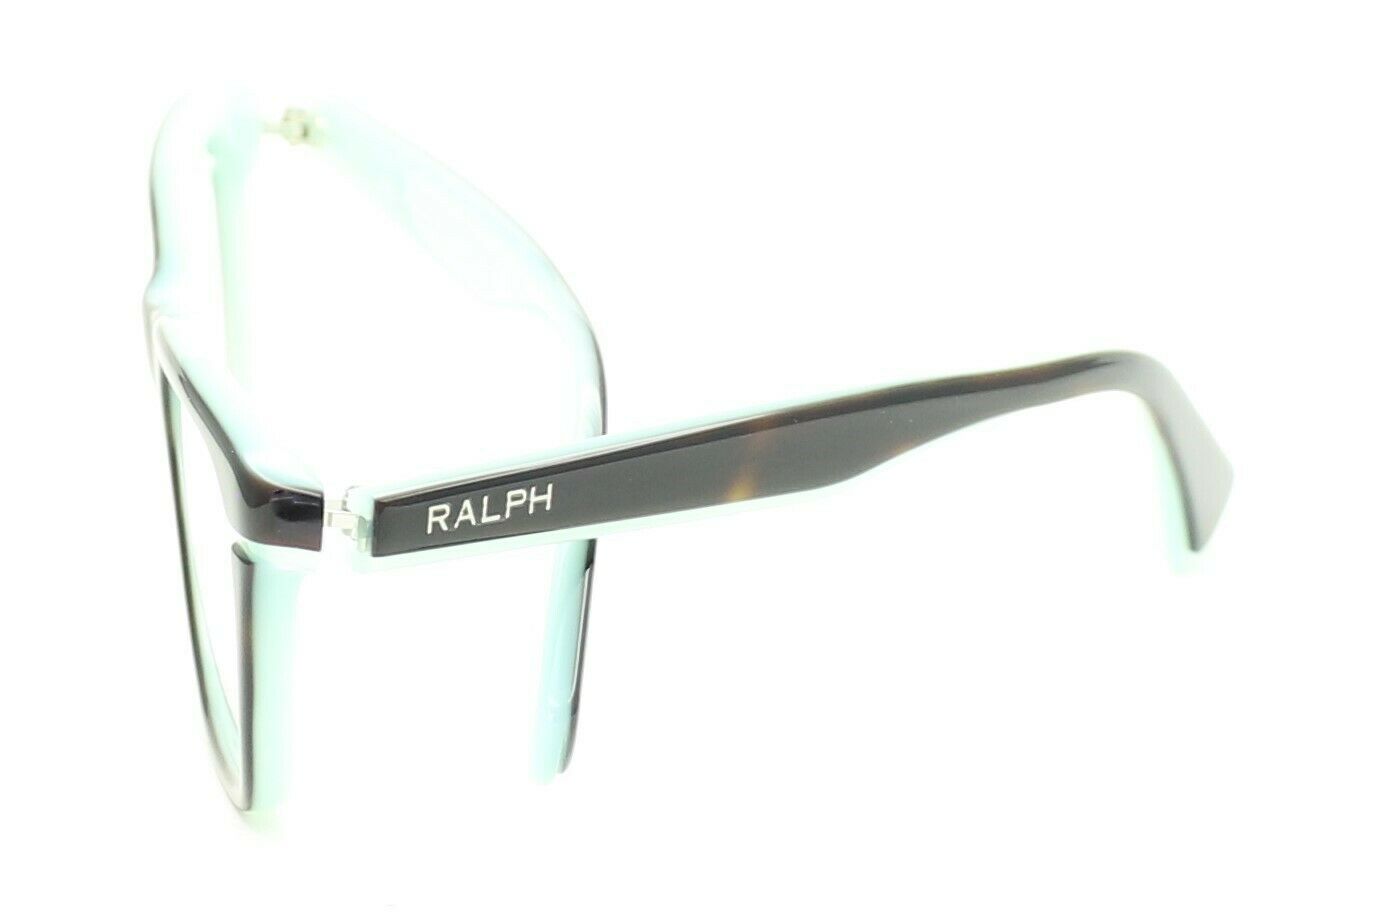 RALPH LAUREN RA 7091 601 53mm RX Optical Eyewear FRAMES Eyeglasses Glasses - New